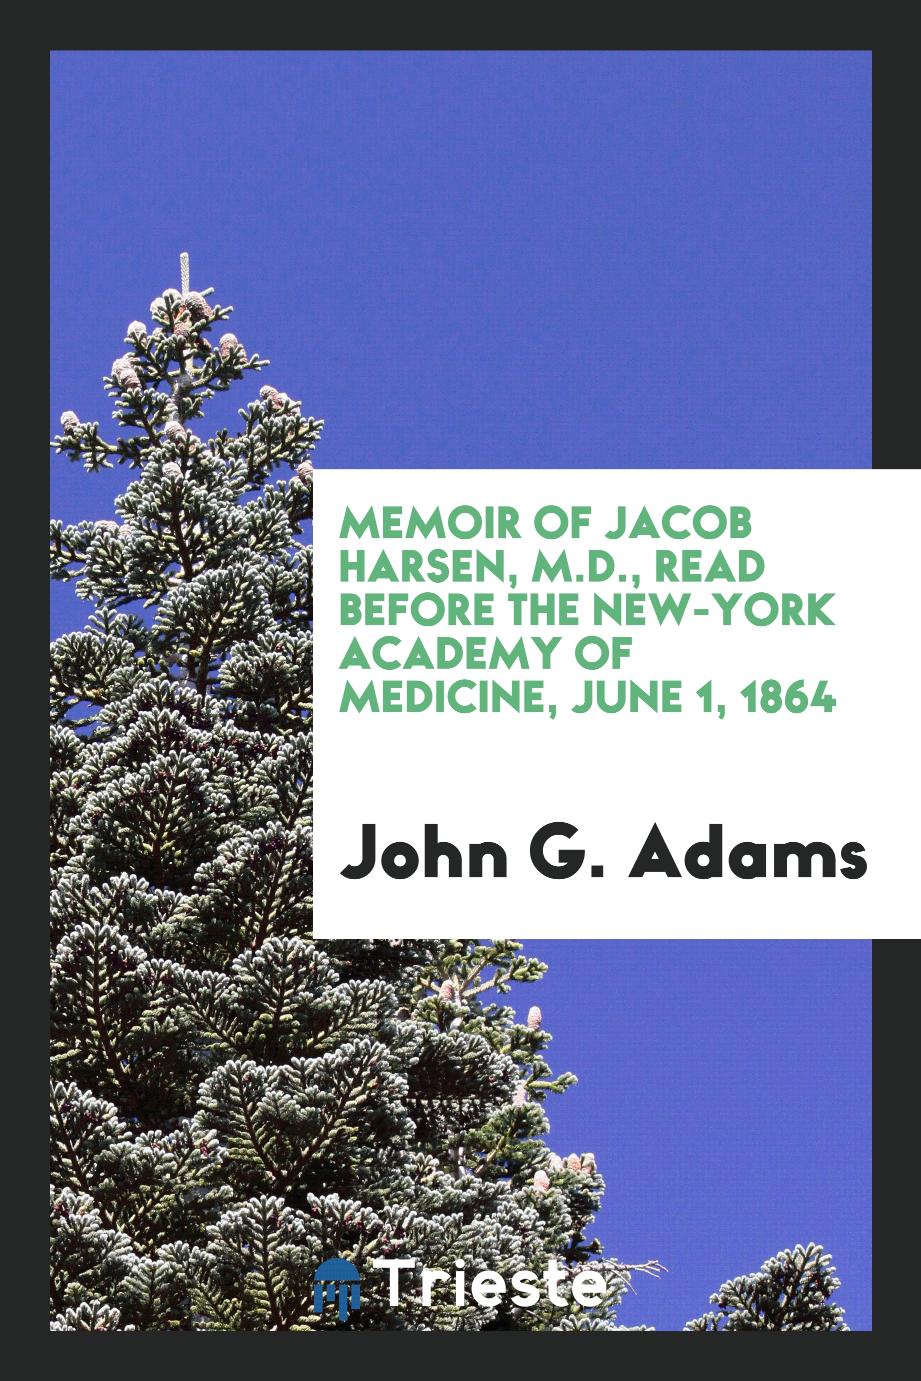 Memoir of Jacob Harsen, M.D., read before the New-York academy of medicine, June 1, 1864